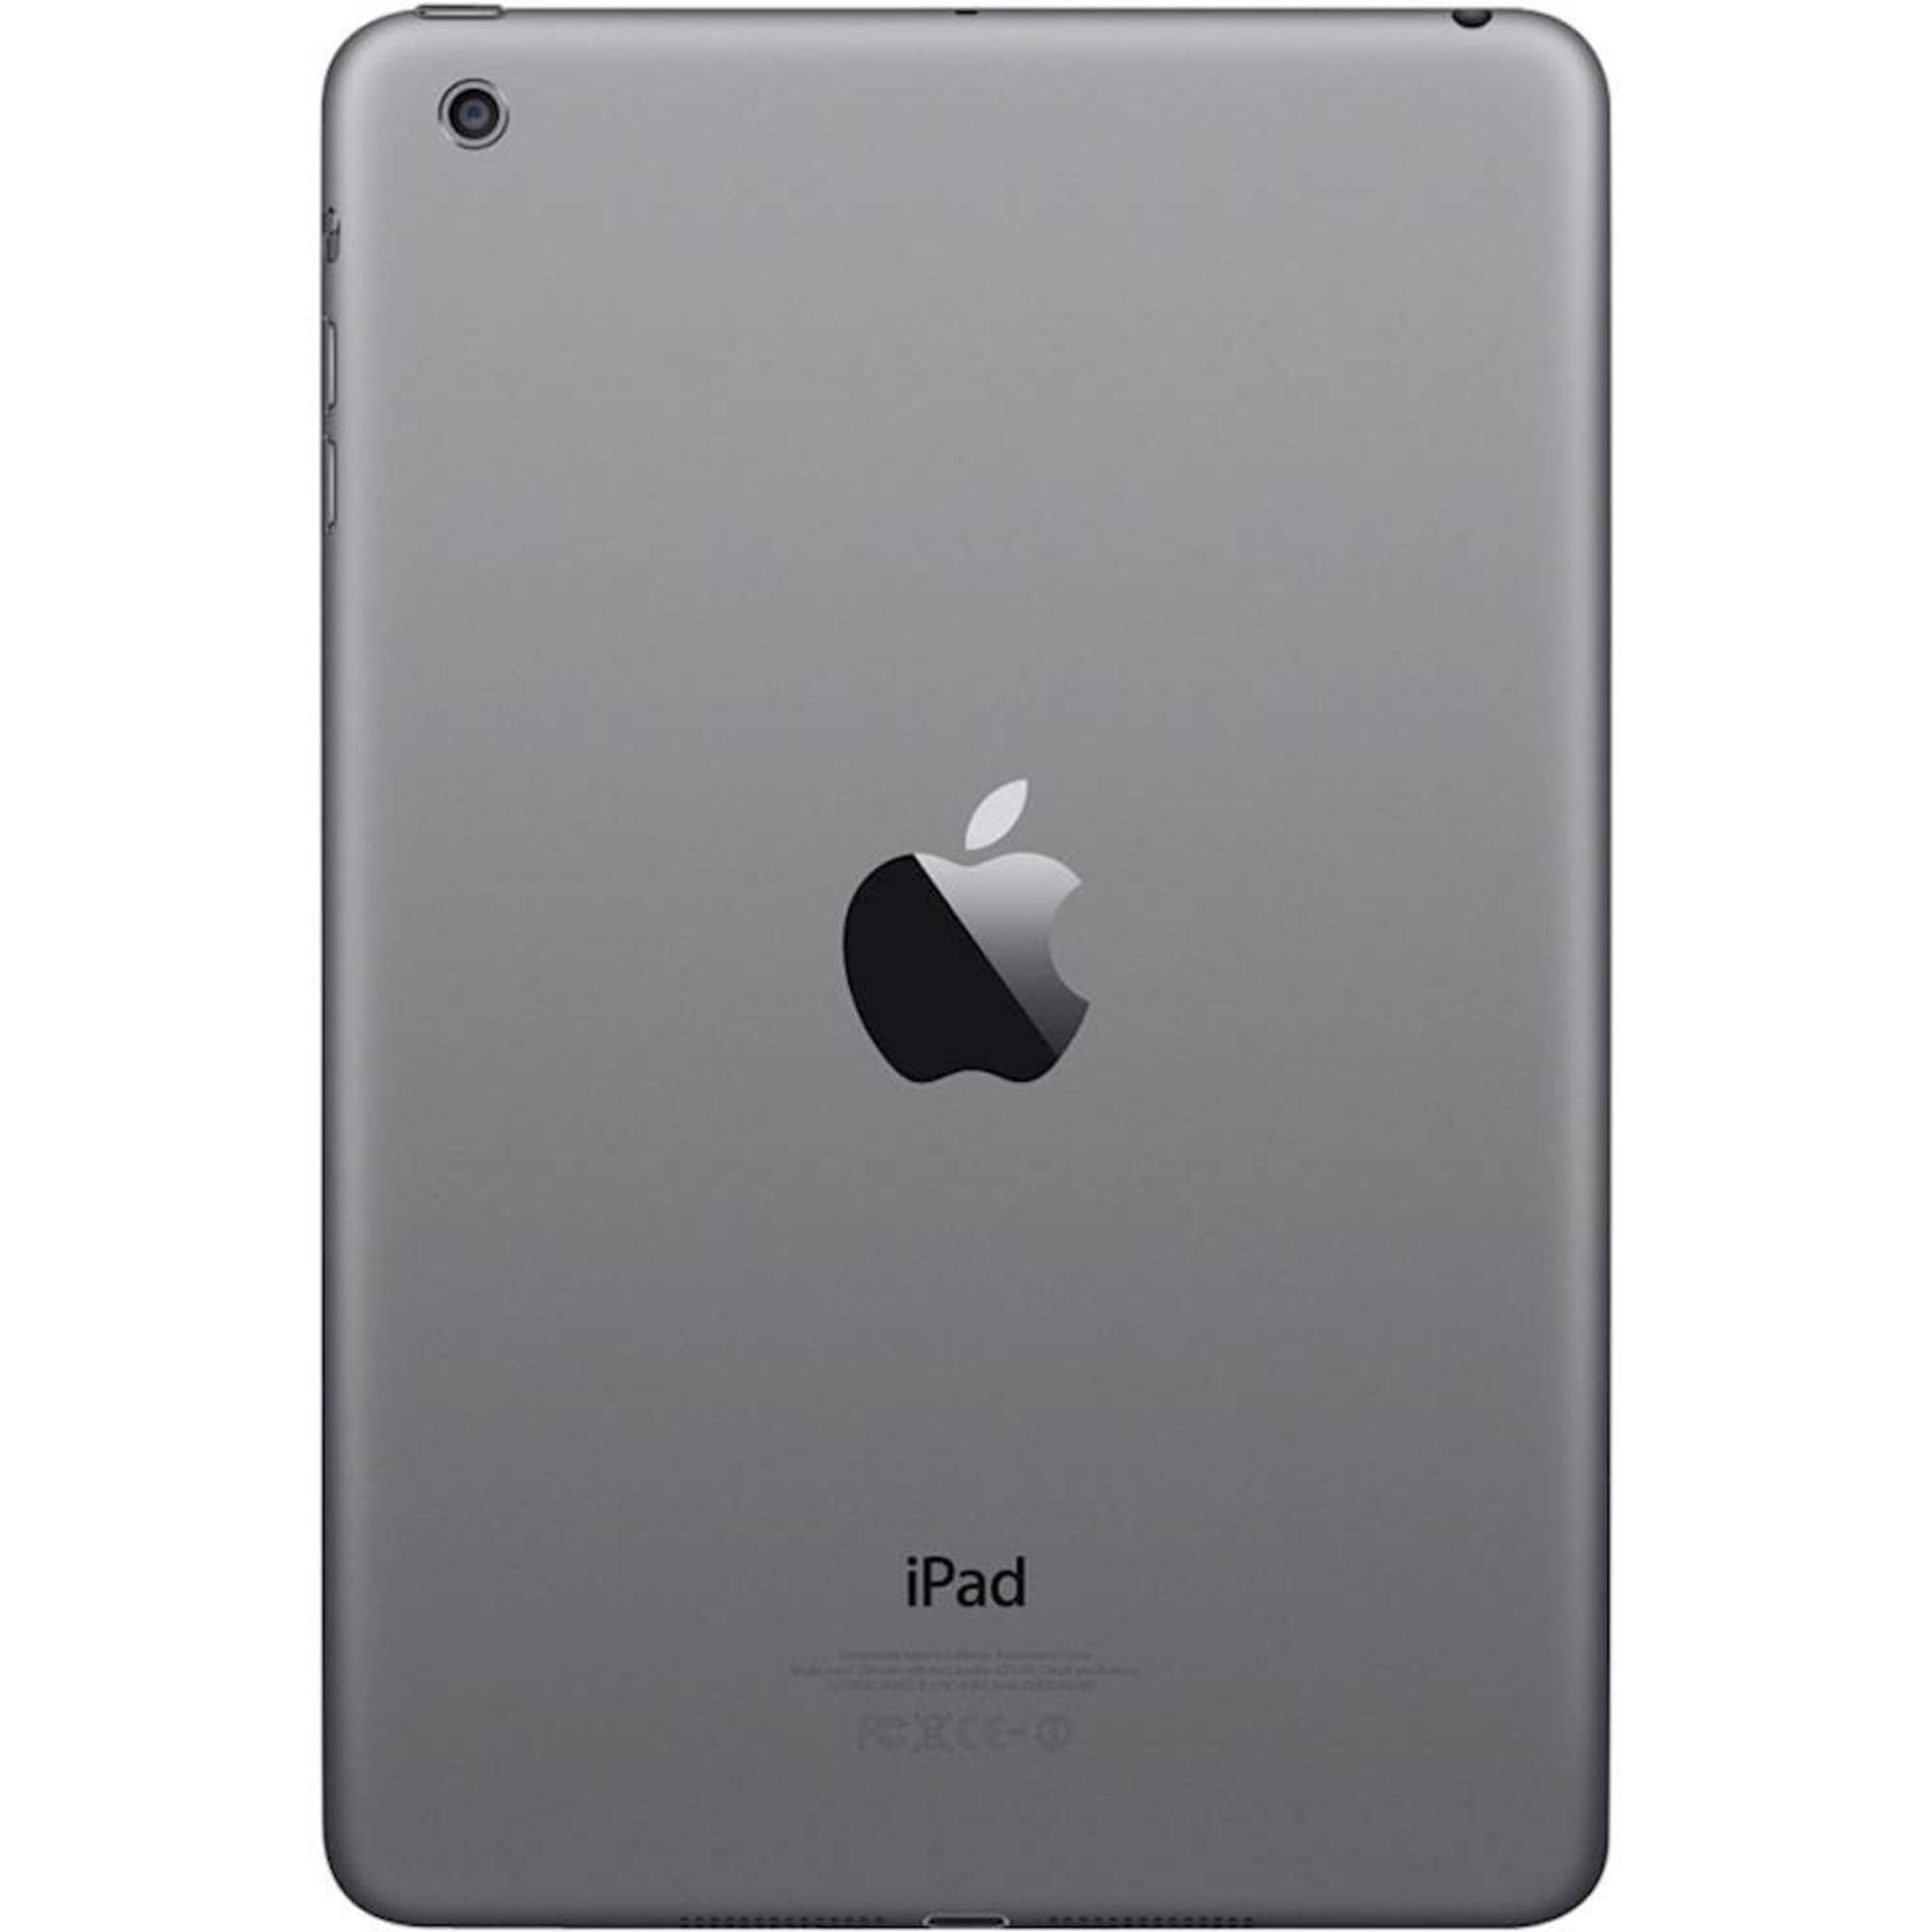 Apple iPad Mini 16GB Wi-Fi Enabled Tablet - Space Gray (Used 